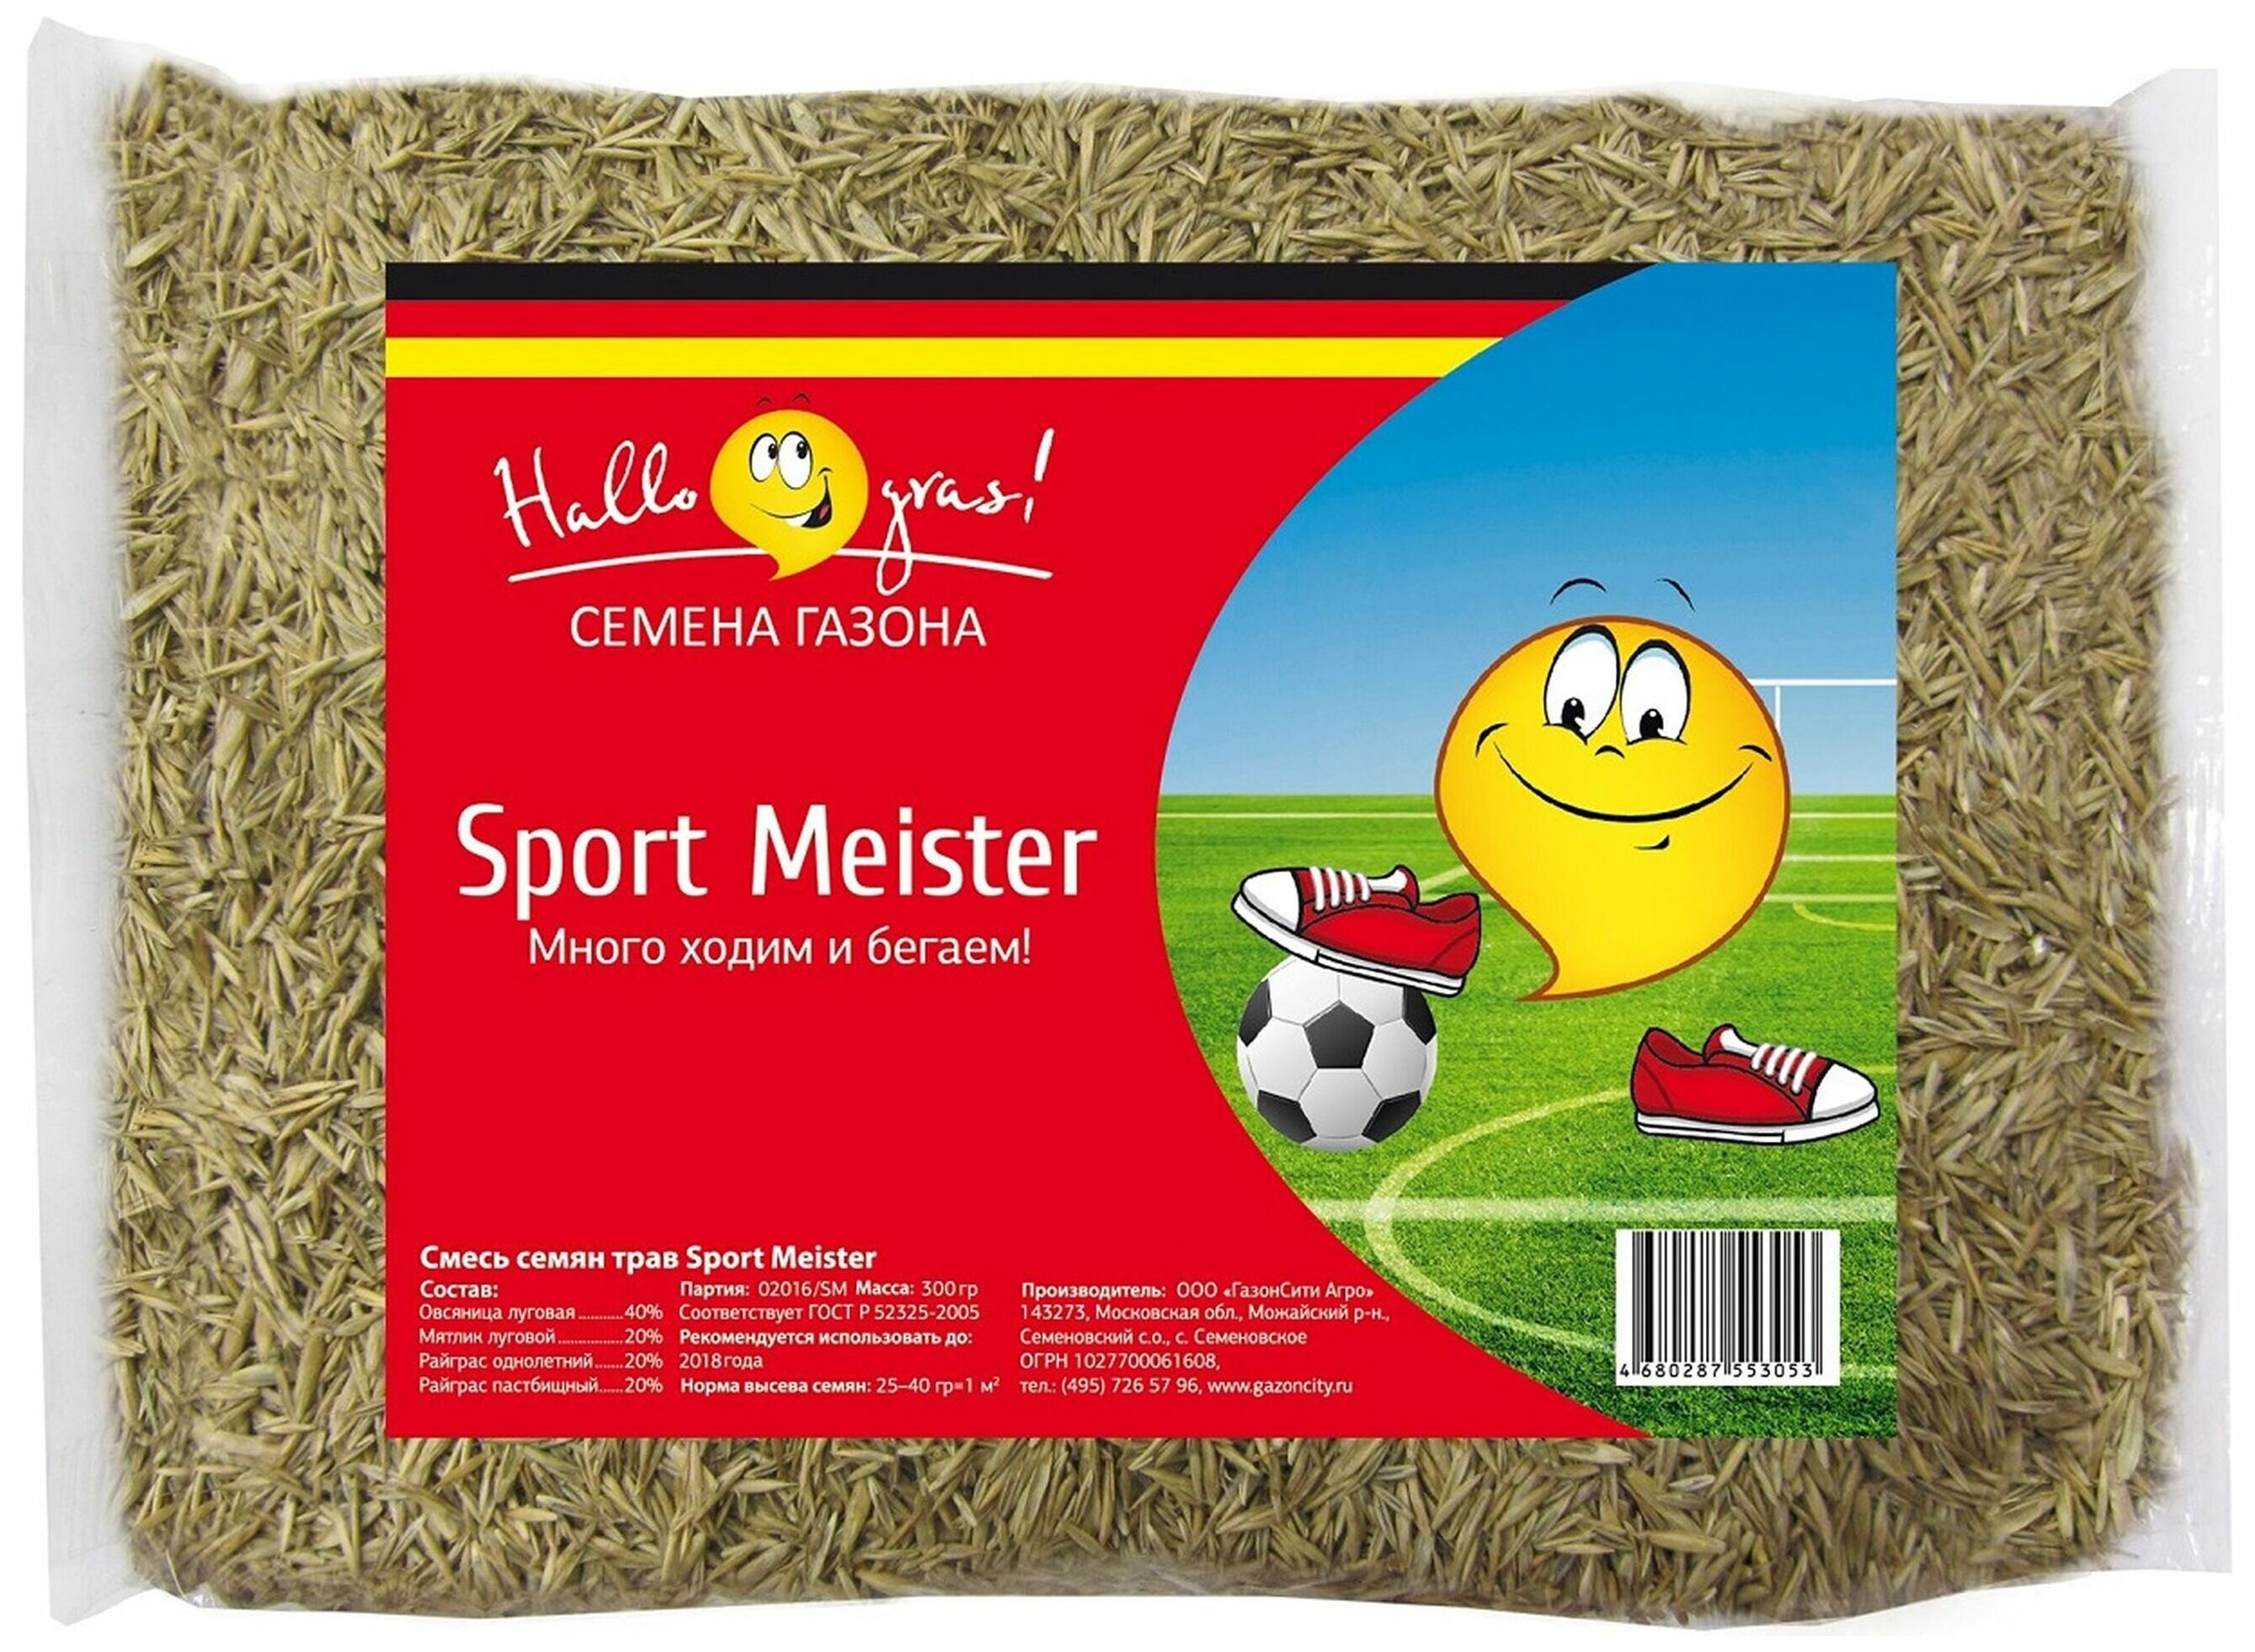 Семена газонной травы ГазонCity Hallo gras! Sport Meister 03 кг